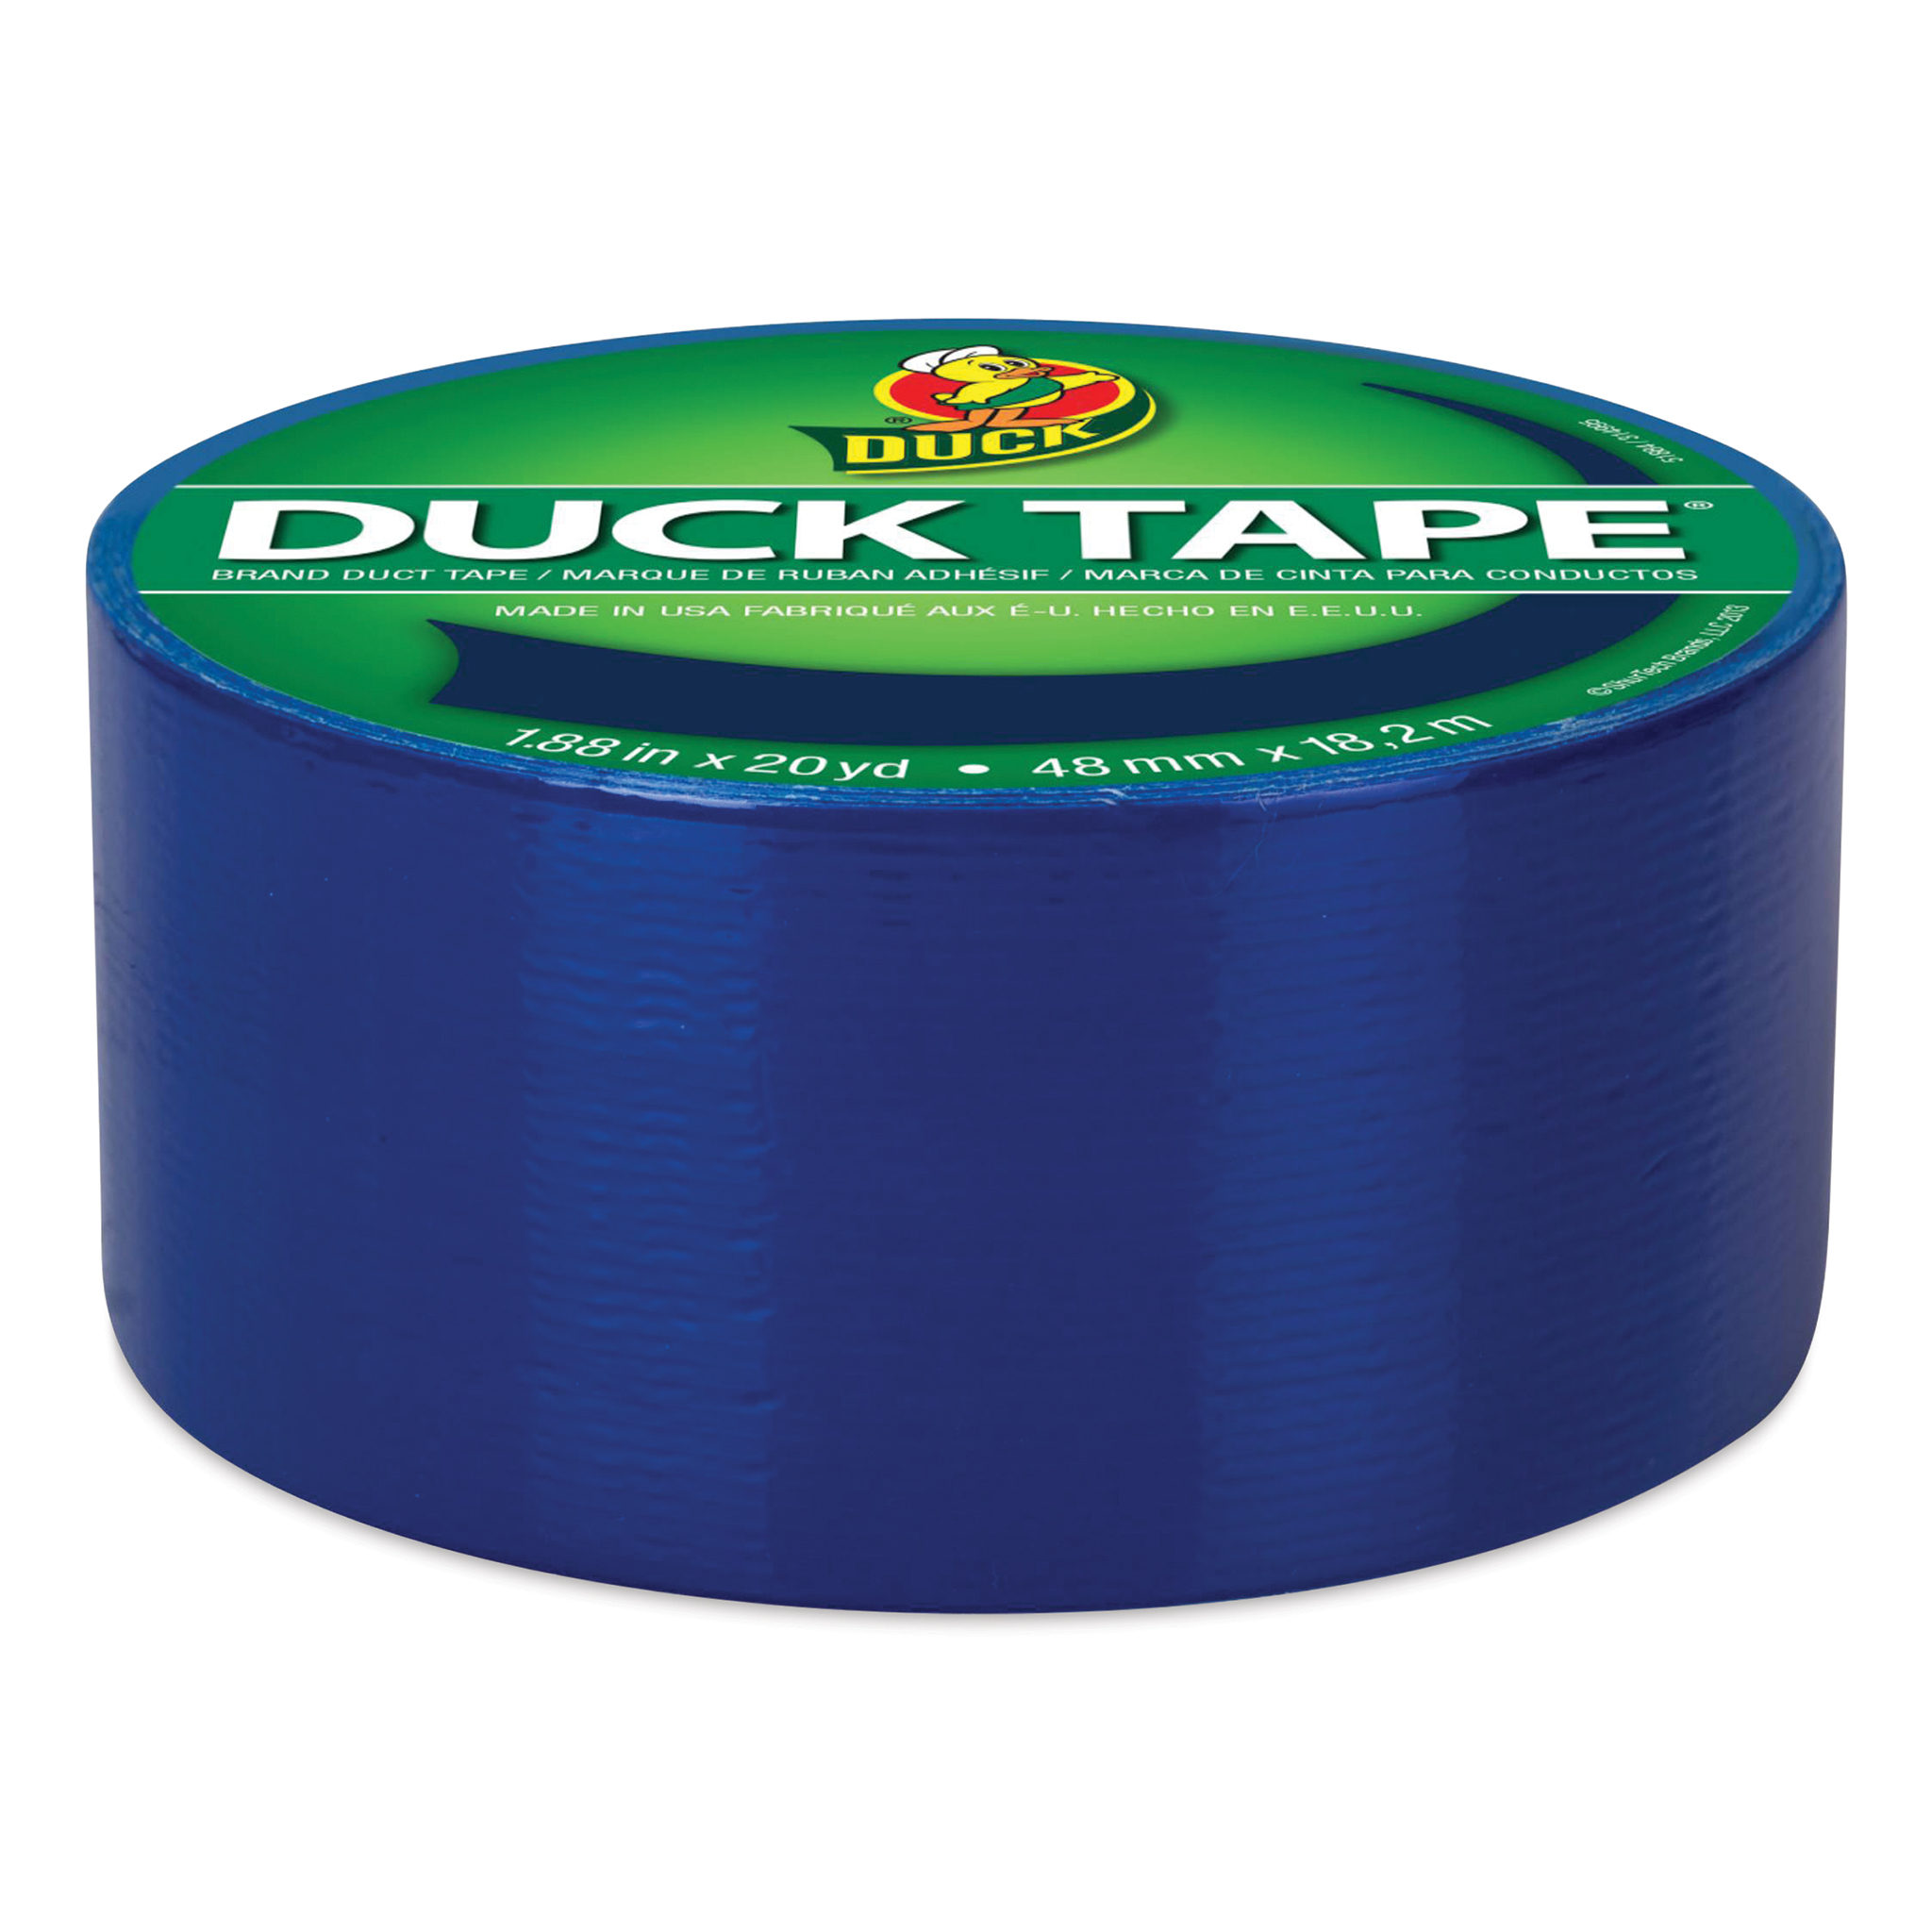 ShurTech Color Duck Tape - 1.88 x 20 yds, White